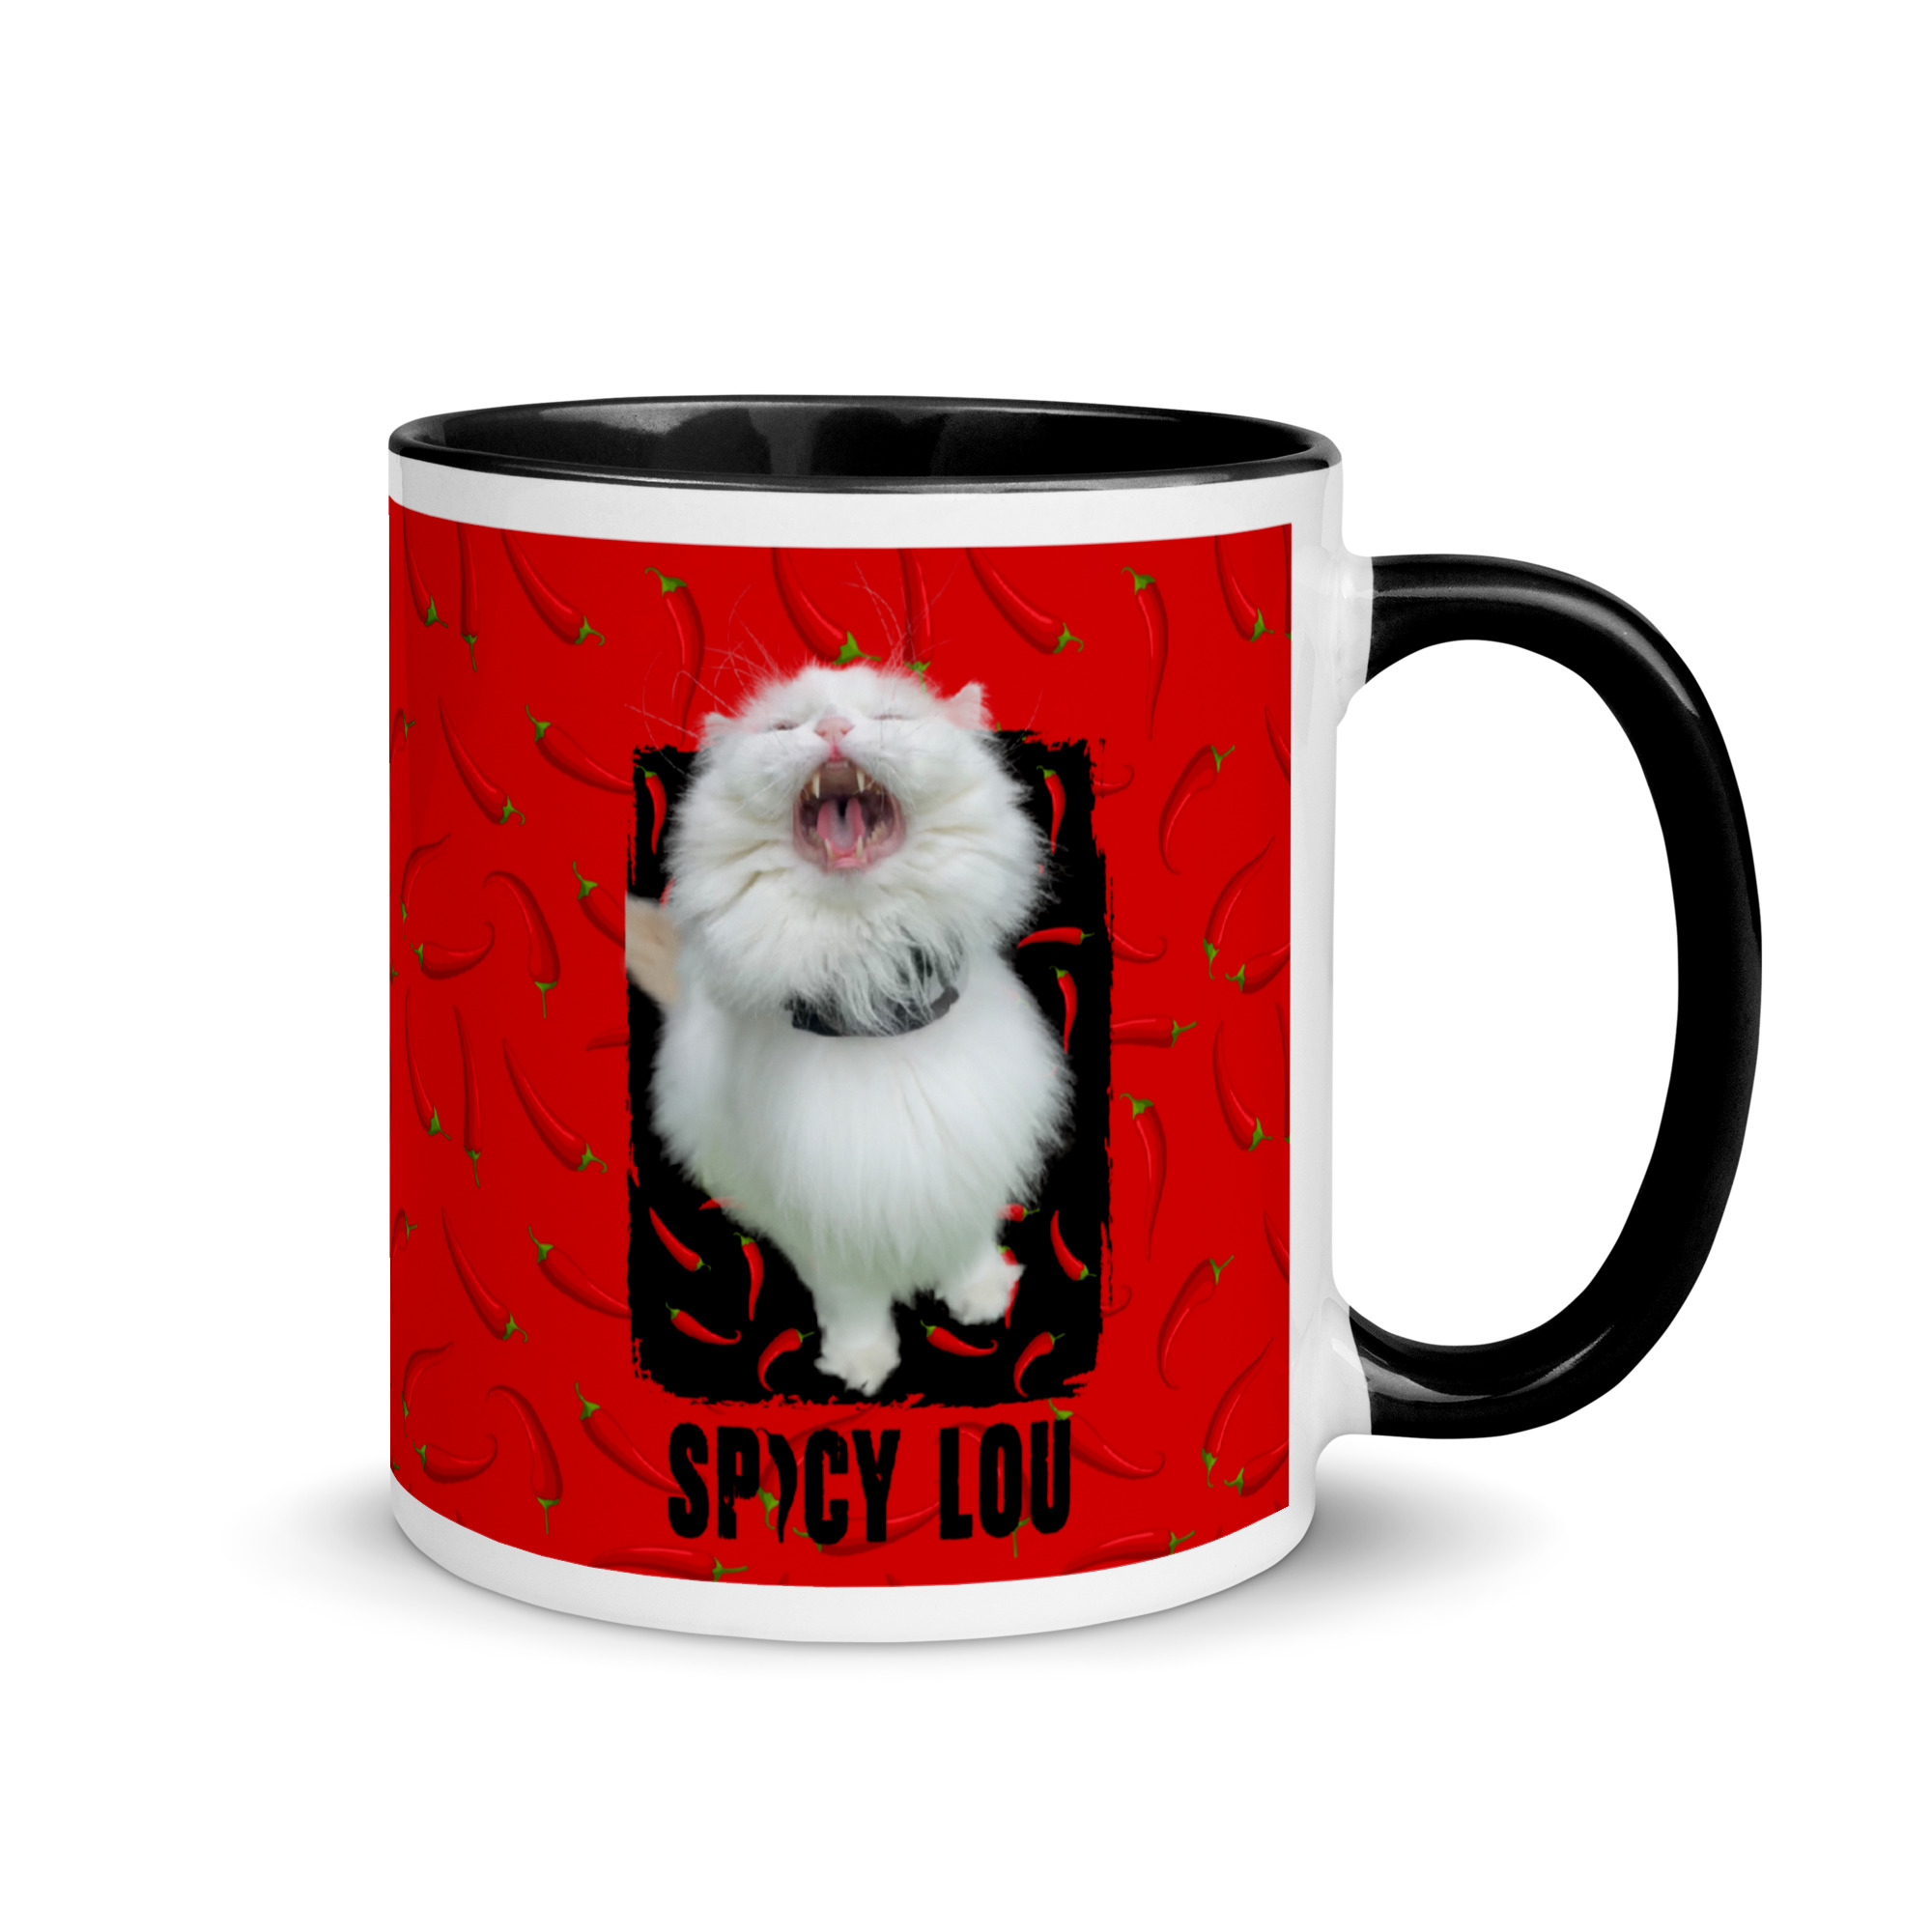 Spicy Lou Mug